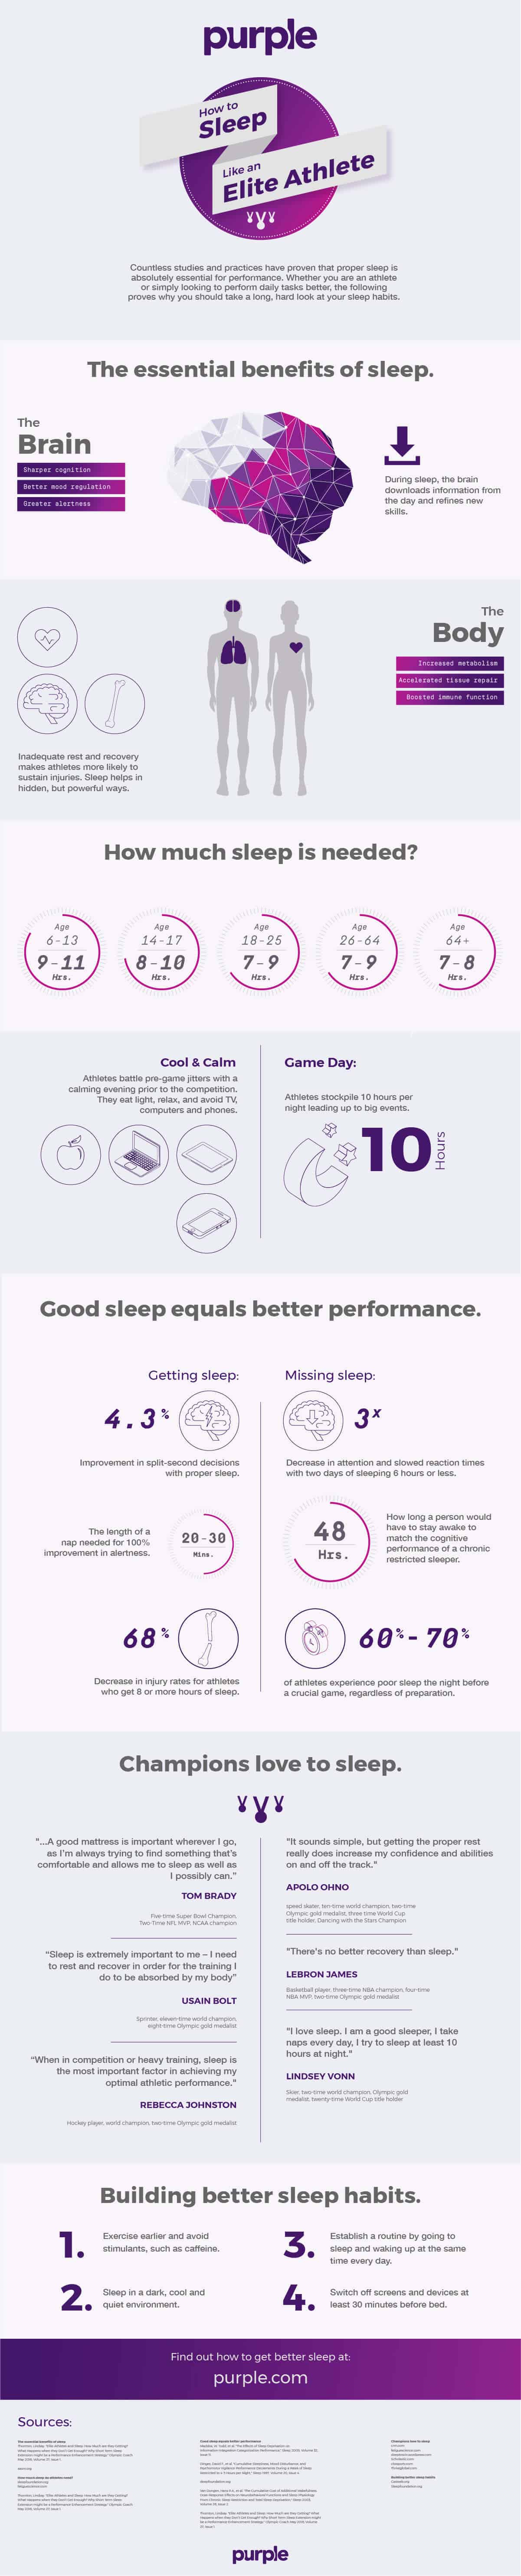 How much sleep athletes need